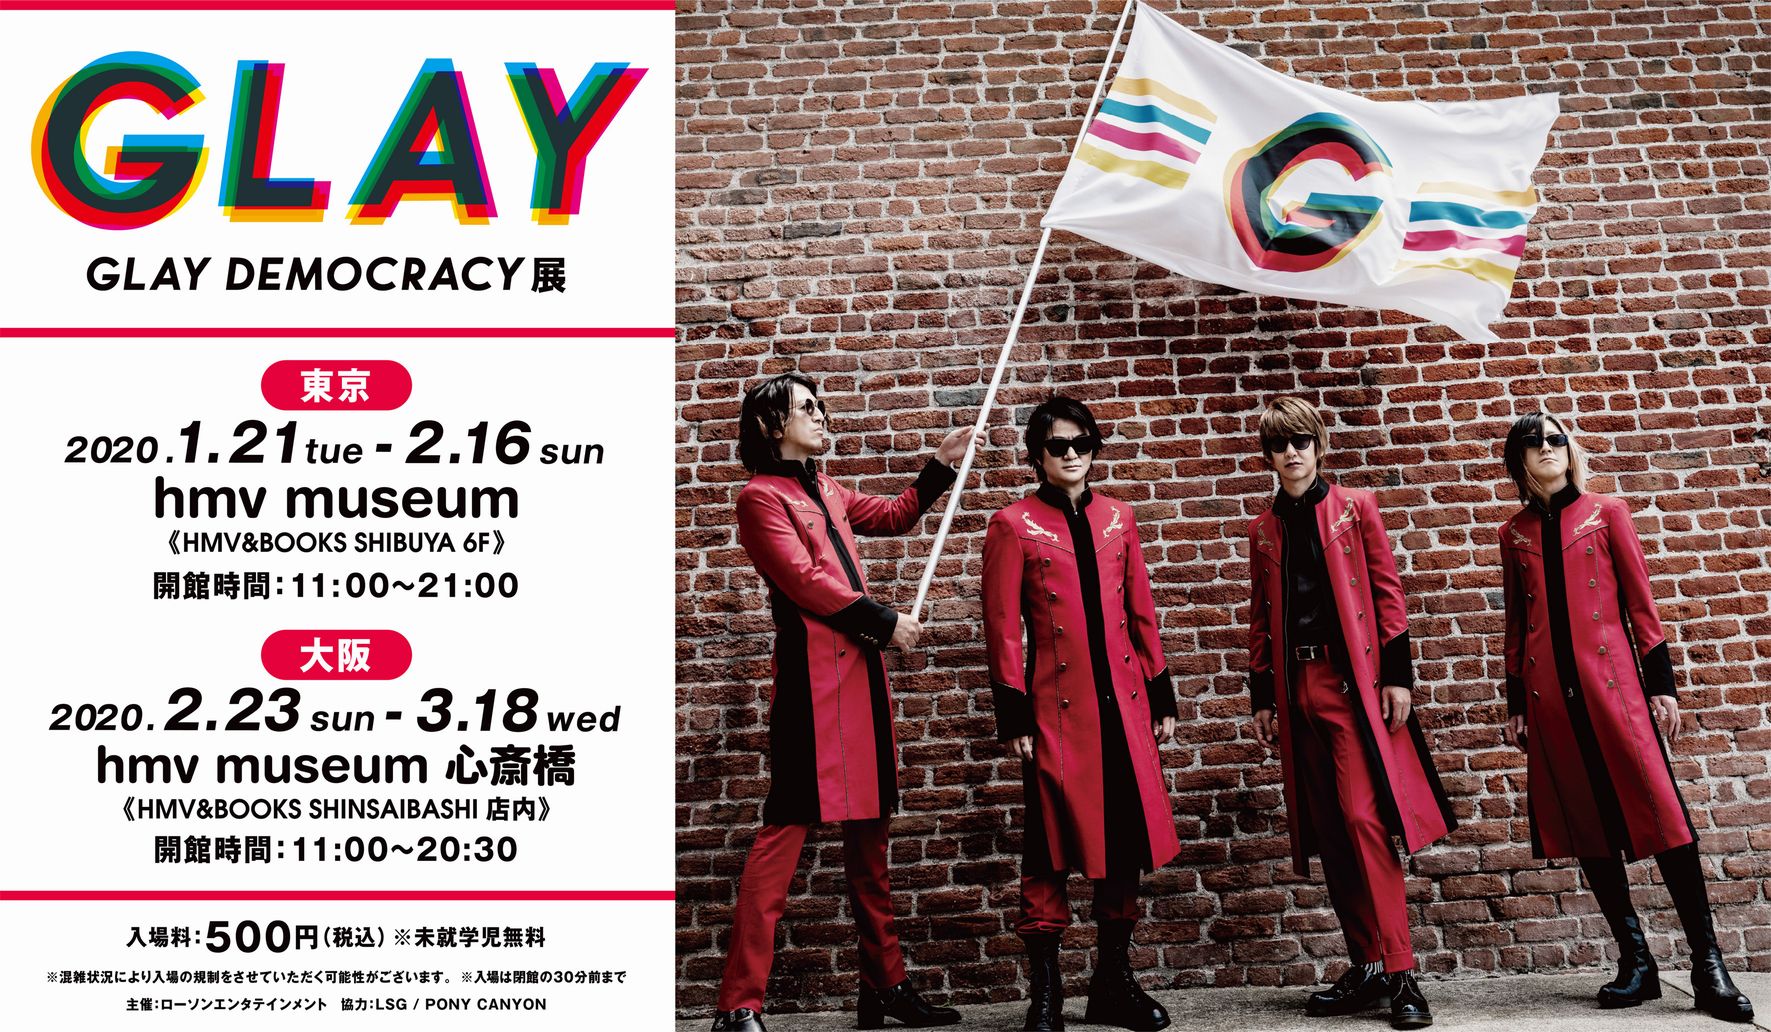 Glayのデビュー25周年を記念した企画展 Glay Democracy展 大阪 心斎橋で開催中 2 23 3 18 大阪ミナミじゃーなる